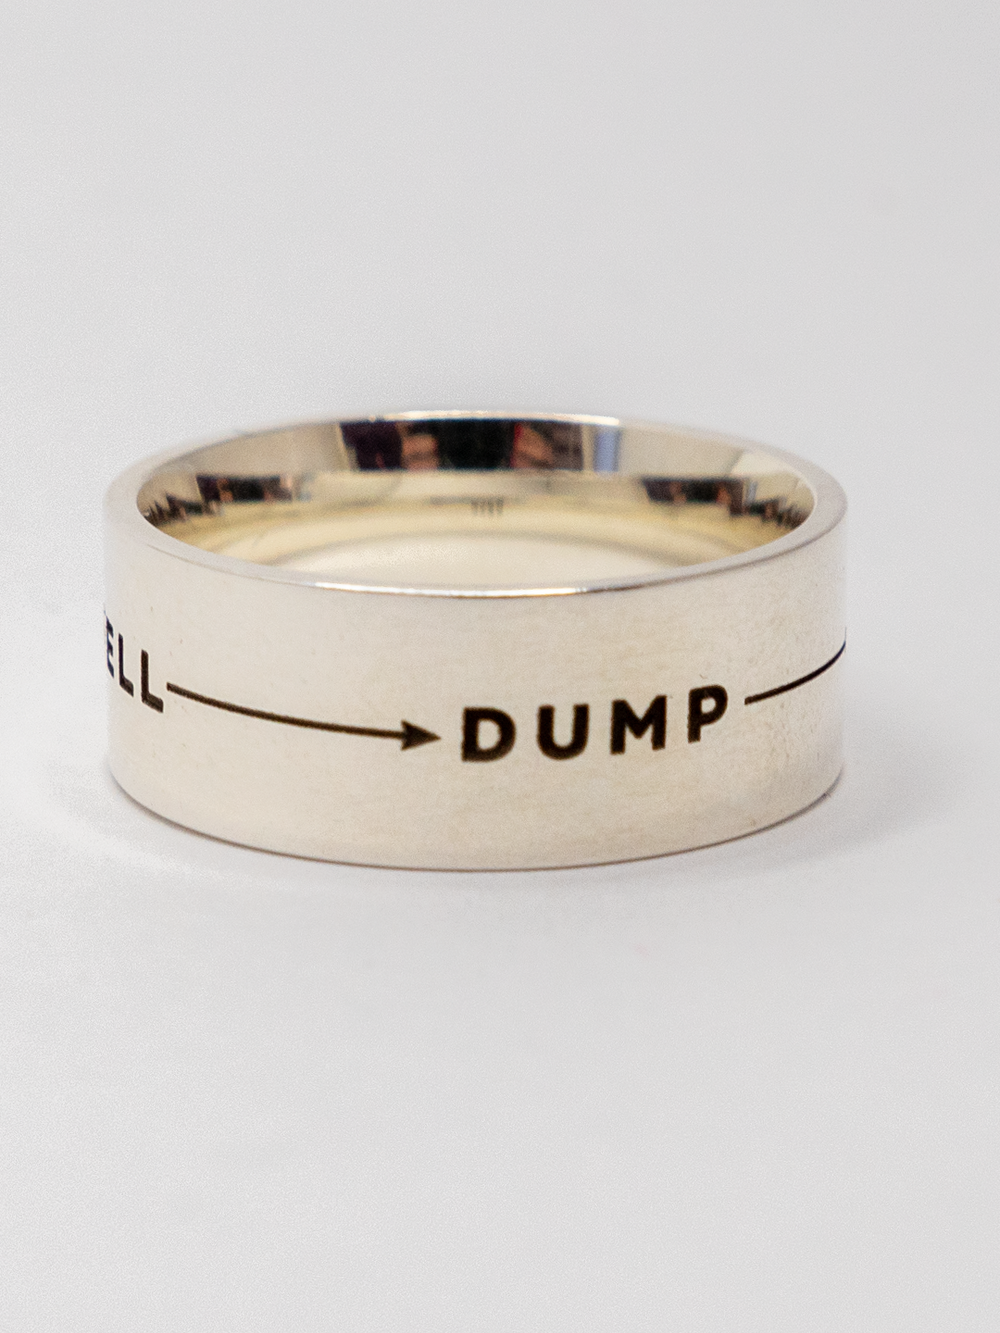 Серебряное кольцо buy sell pump dump от Hodl Jewelry